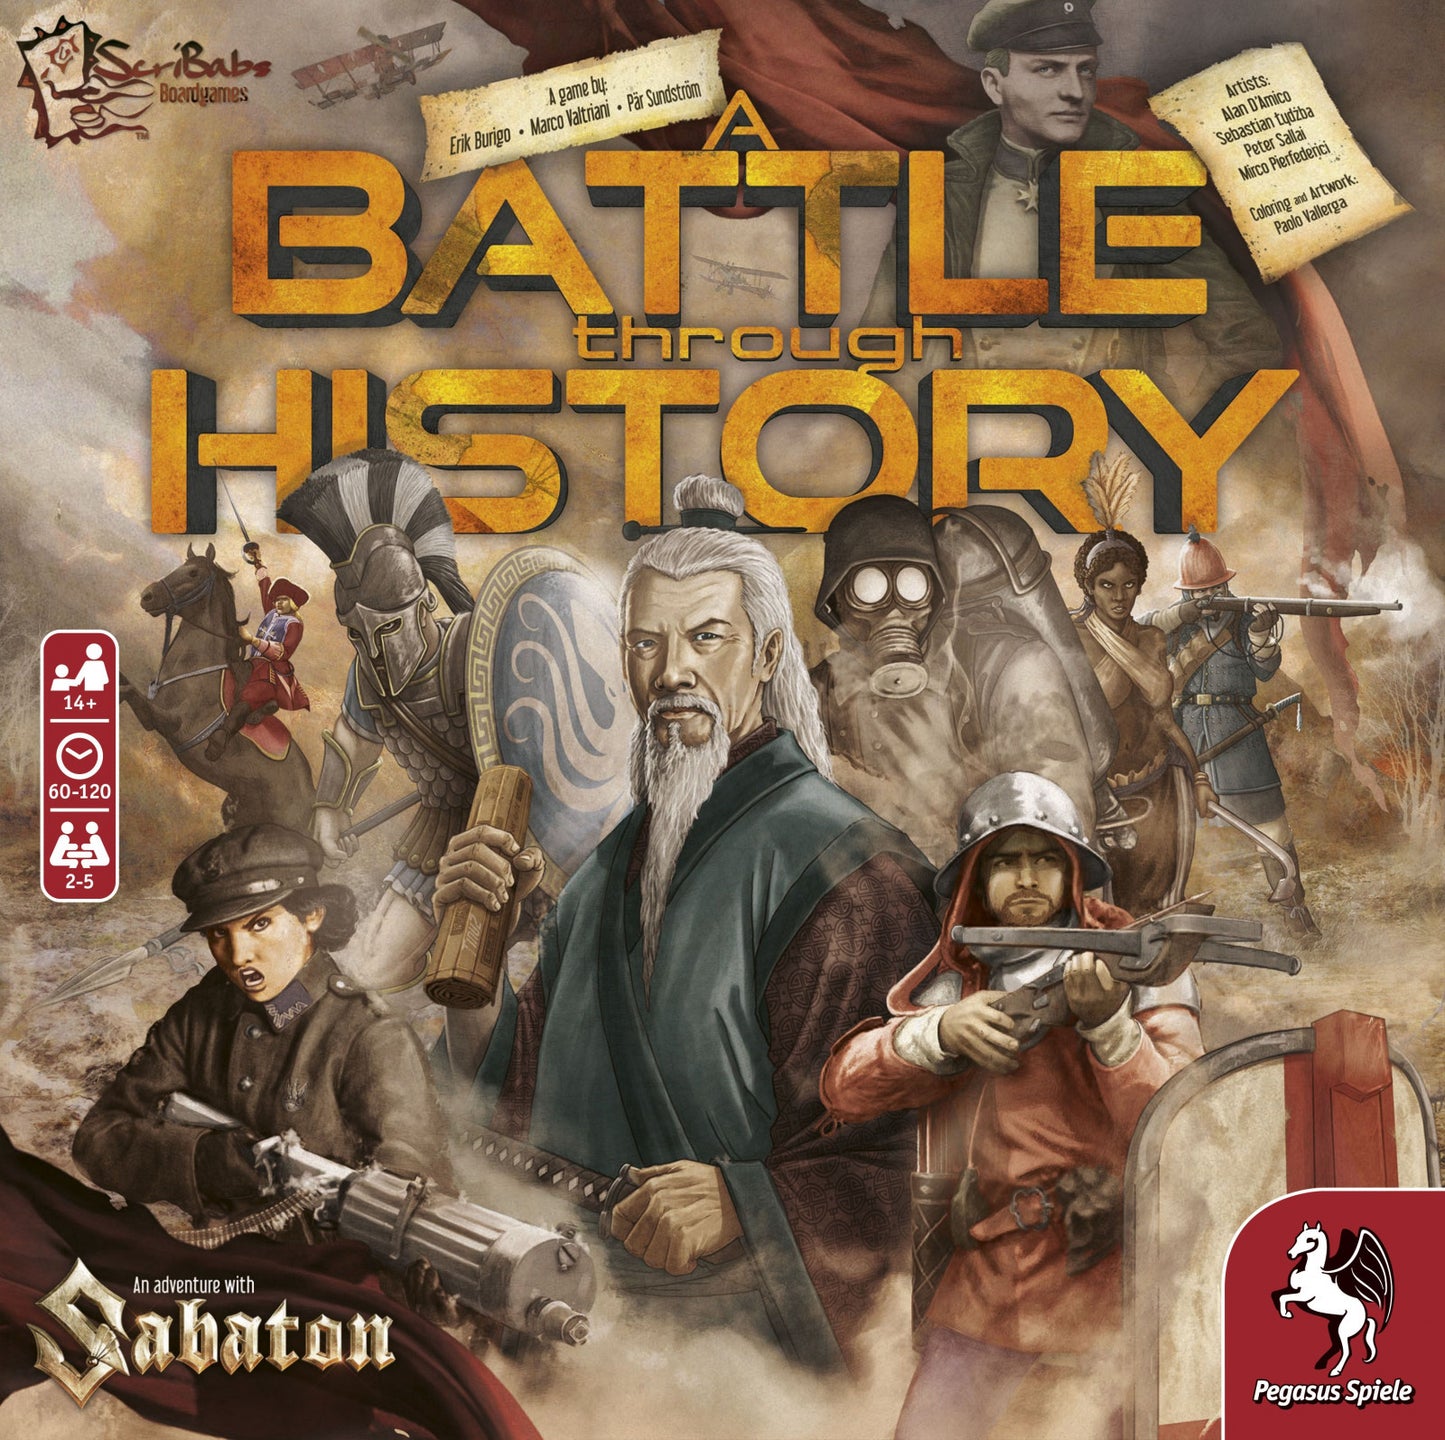 A Battle Through History - An Adventure with Sabaton